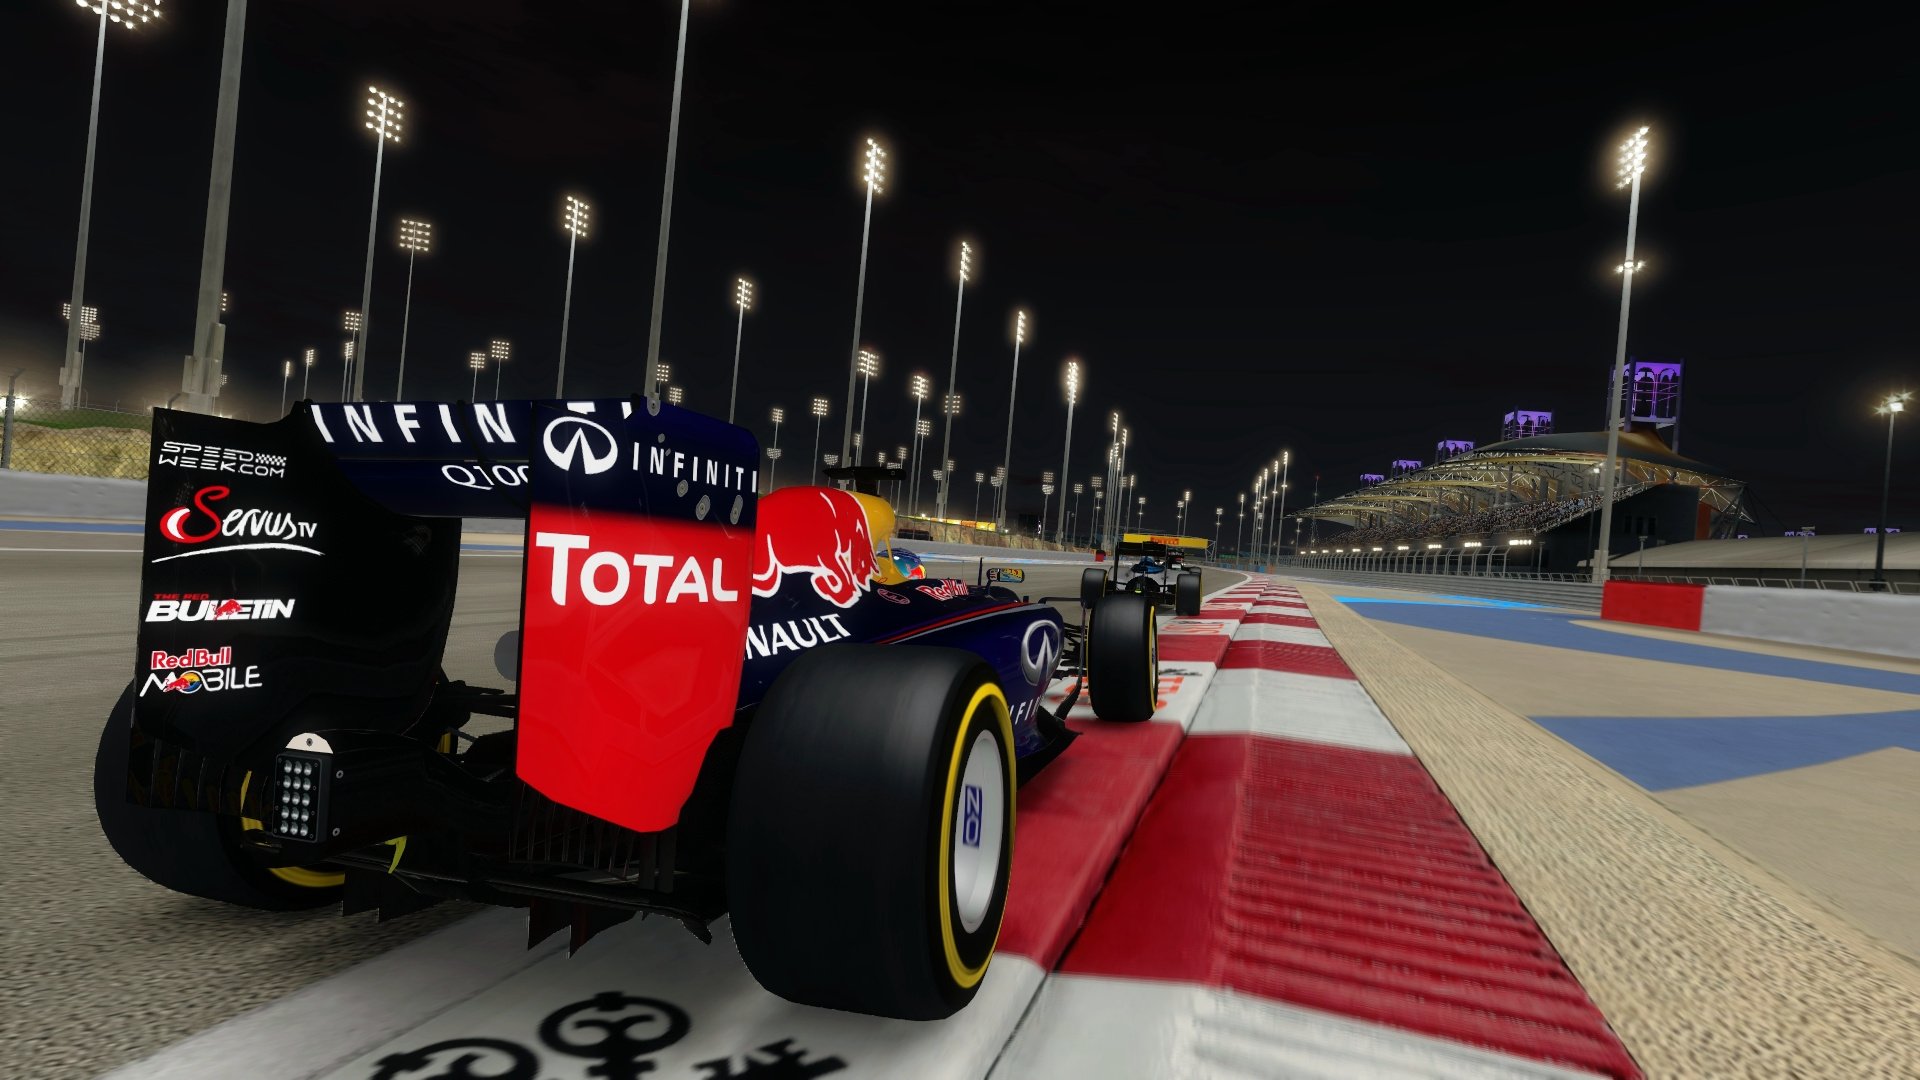 F1 2014 (Xbox 360) News, Reviews, Screenshots, Trailers